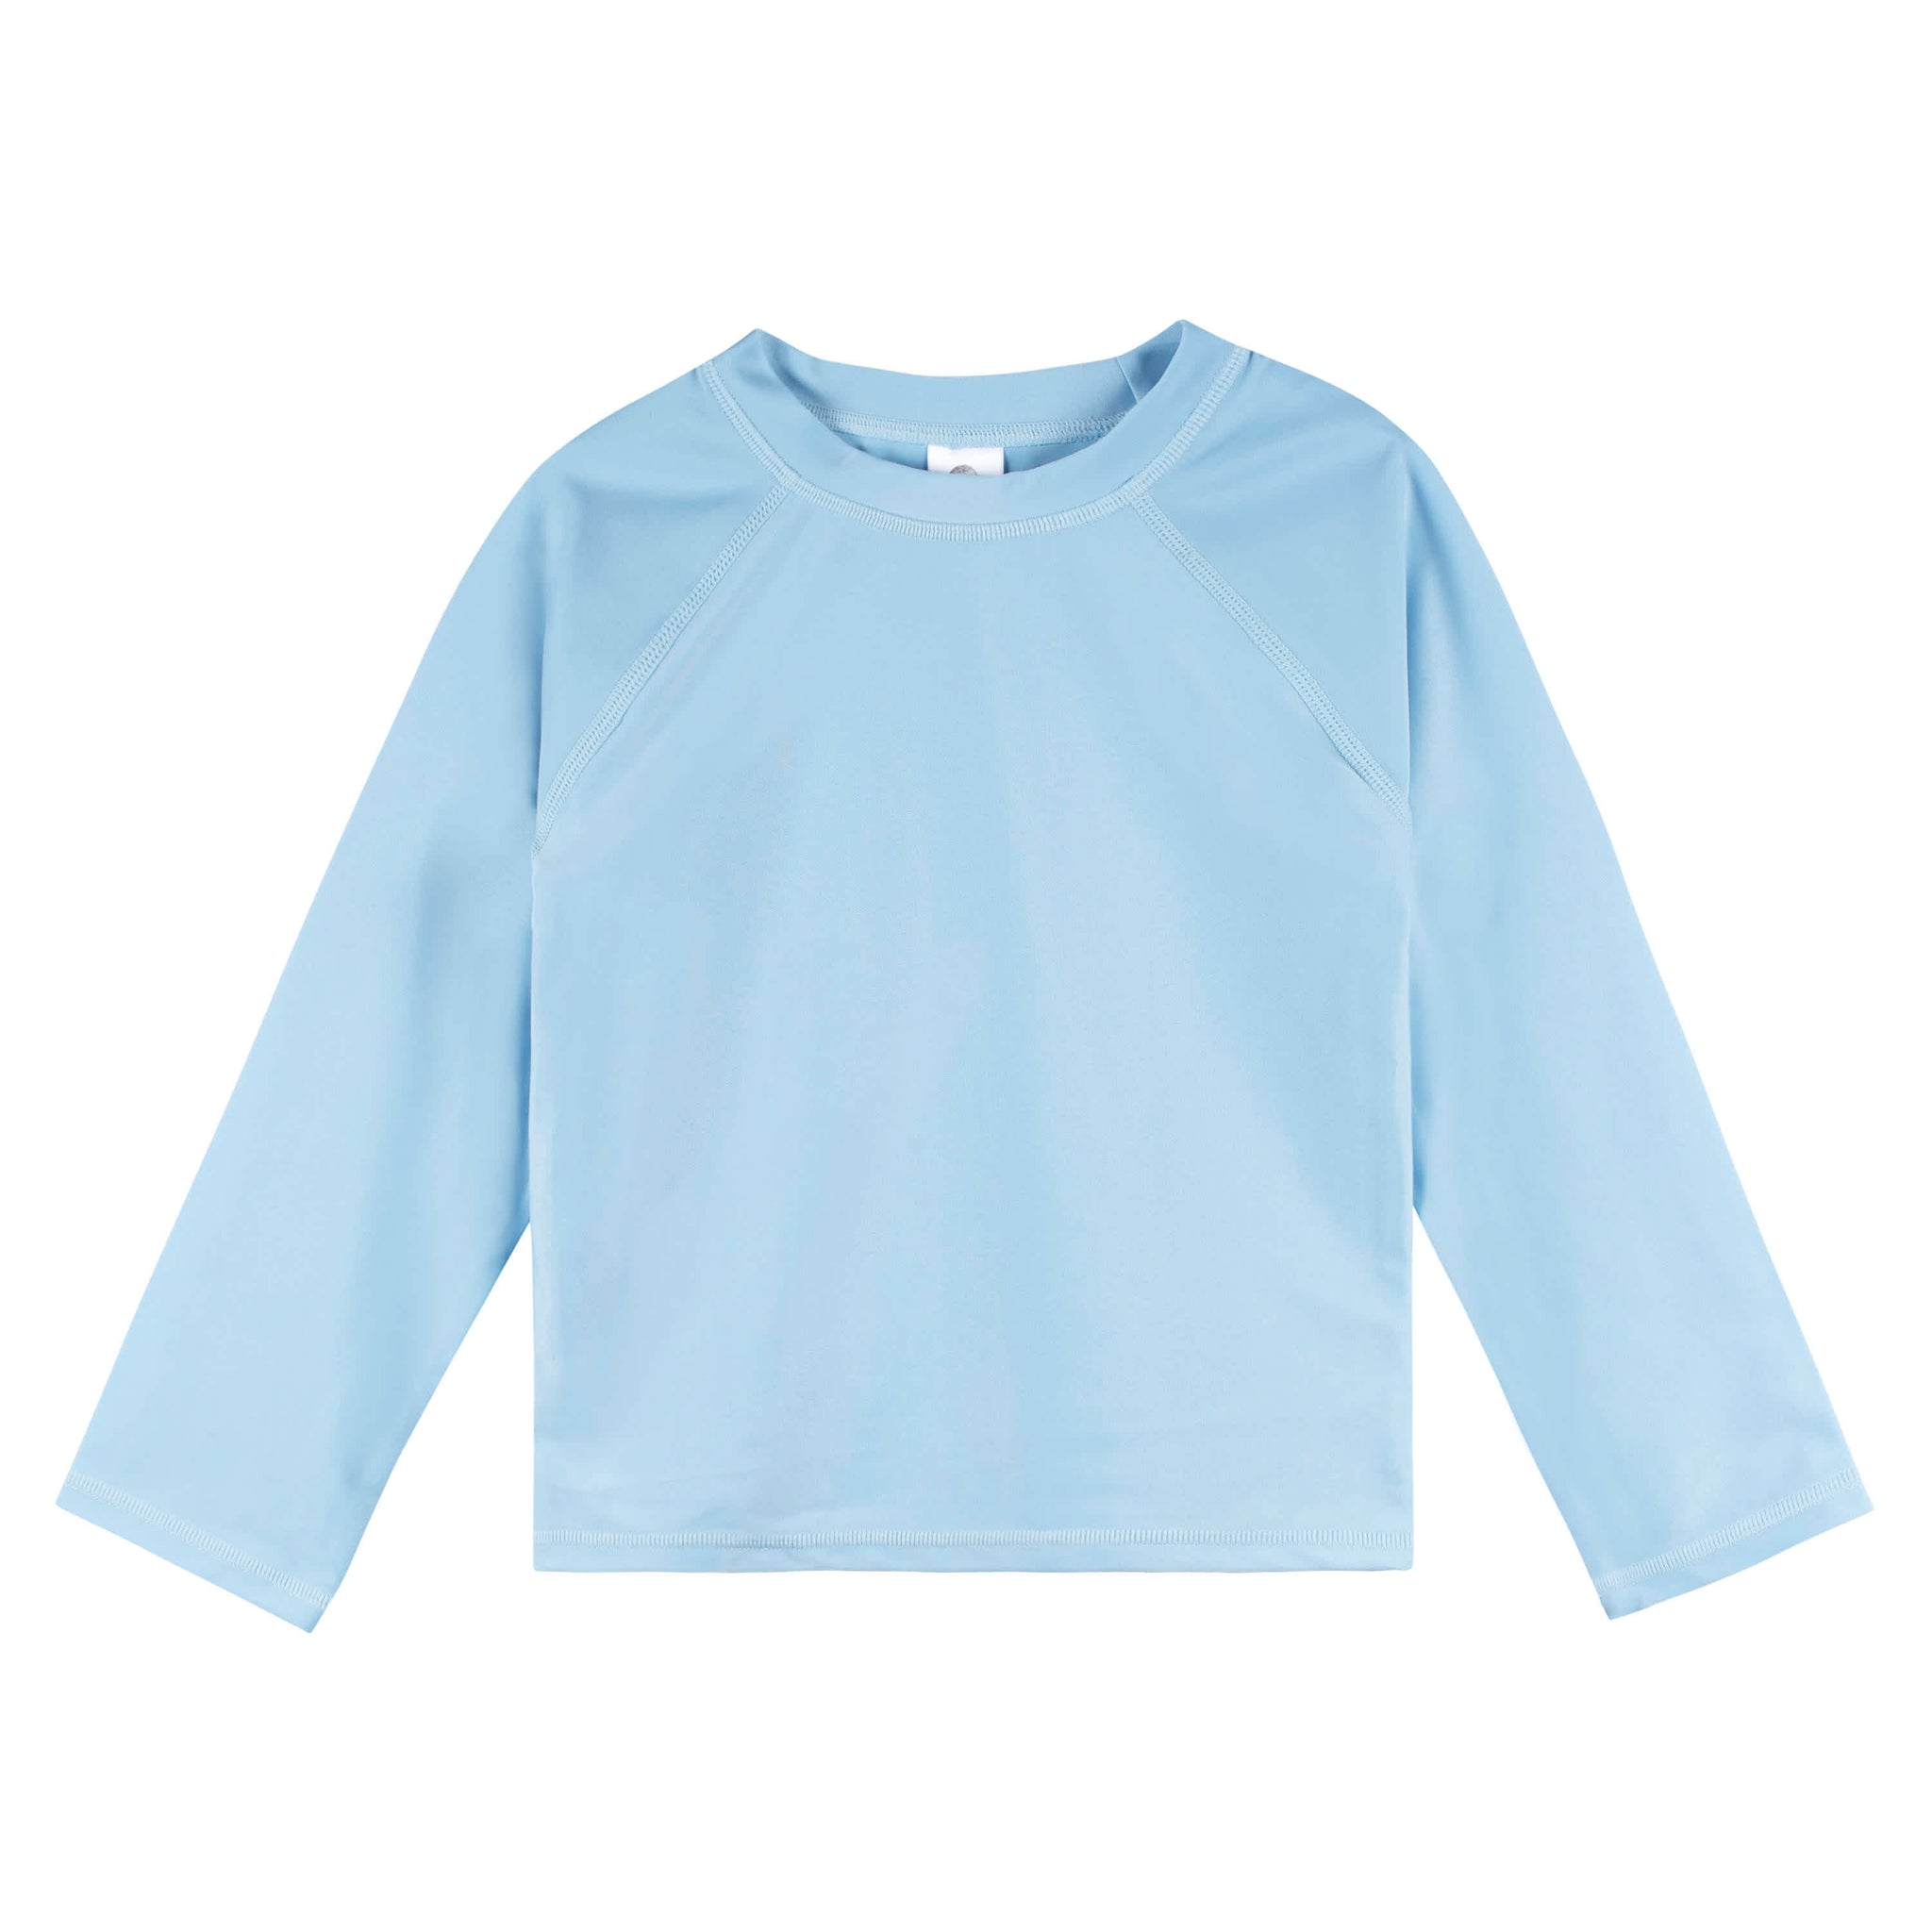 Baby & Toddler Neutral Light Blue Rashguard-Gerber Childrenswear Wholesale